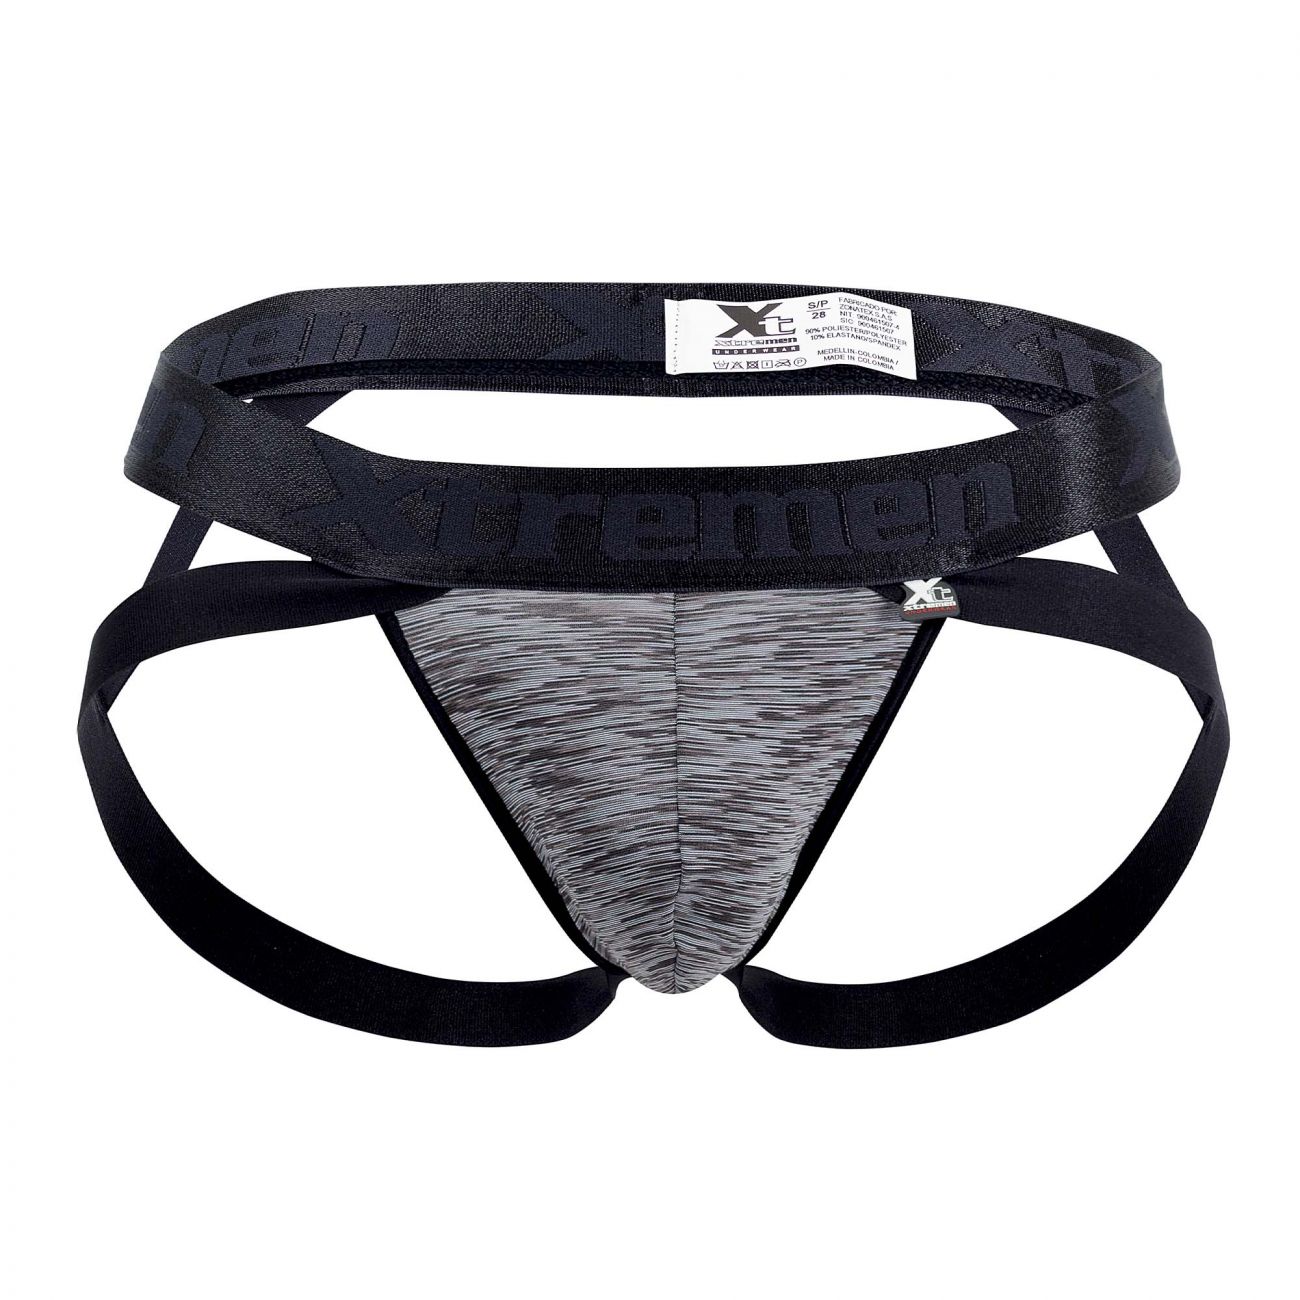 Underwear: Xtremen 91068 Microfiber Jockstrap | eBay